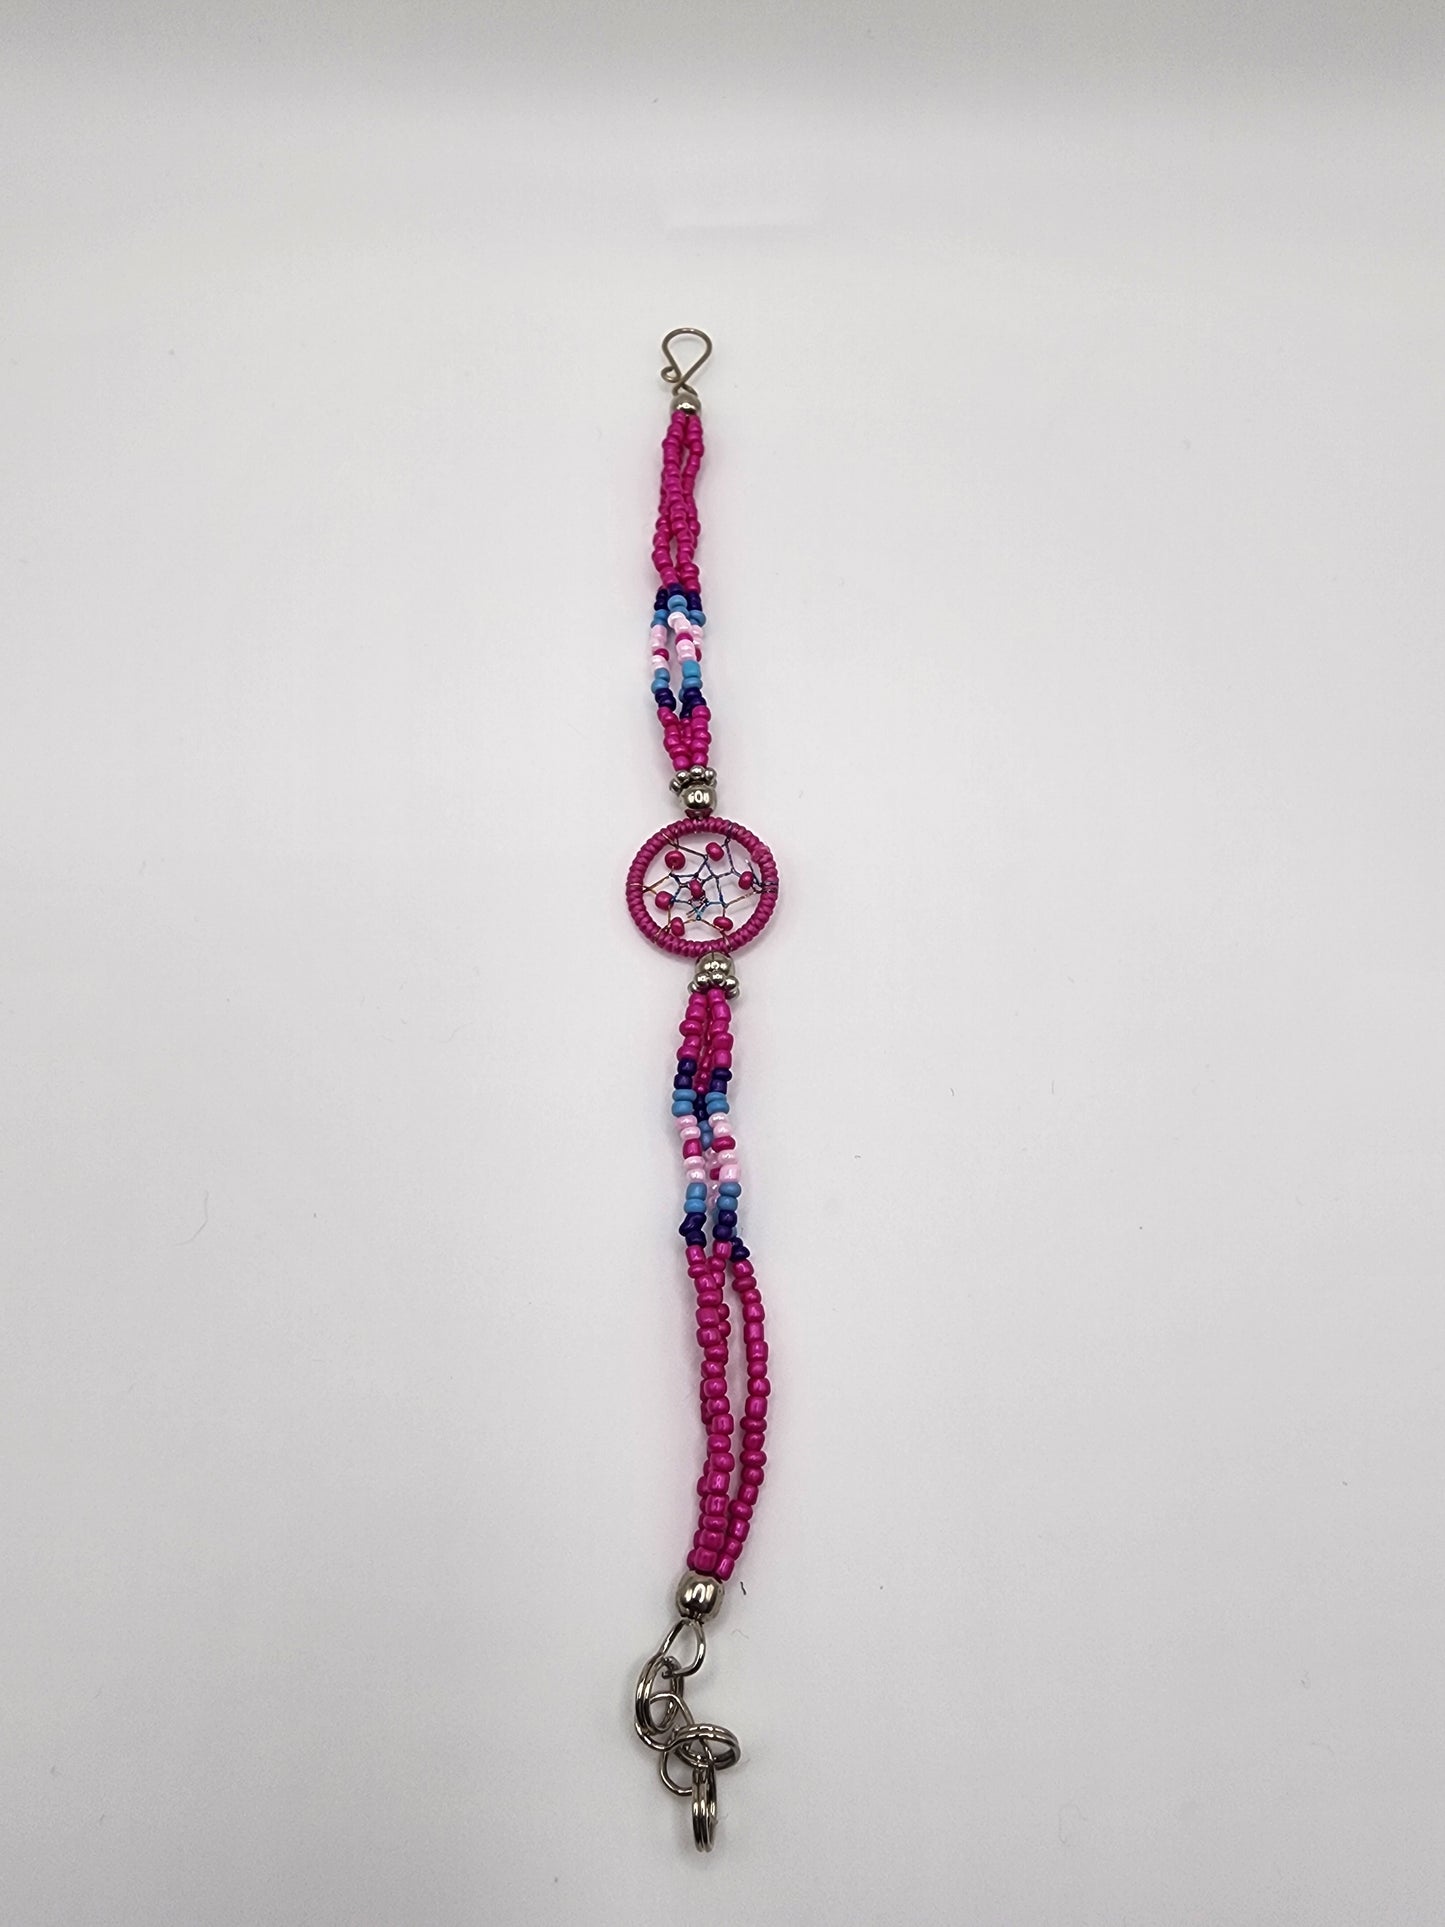 Dream Catcher - Beaded Multi Strand - Bracelets - Assorted Colors